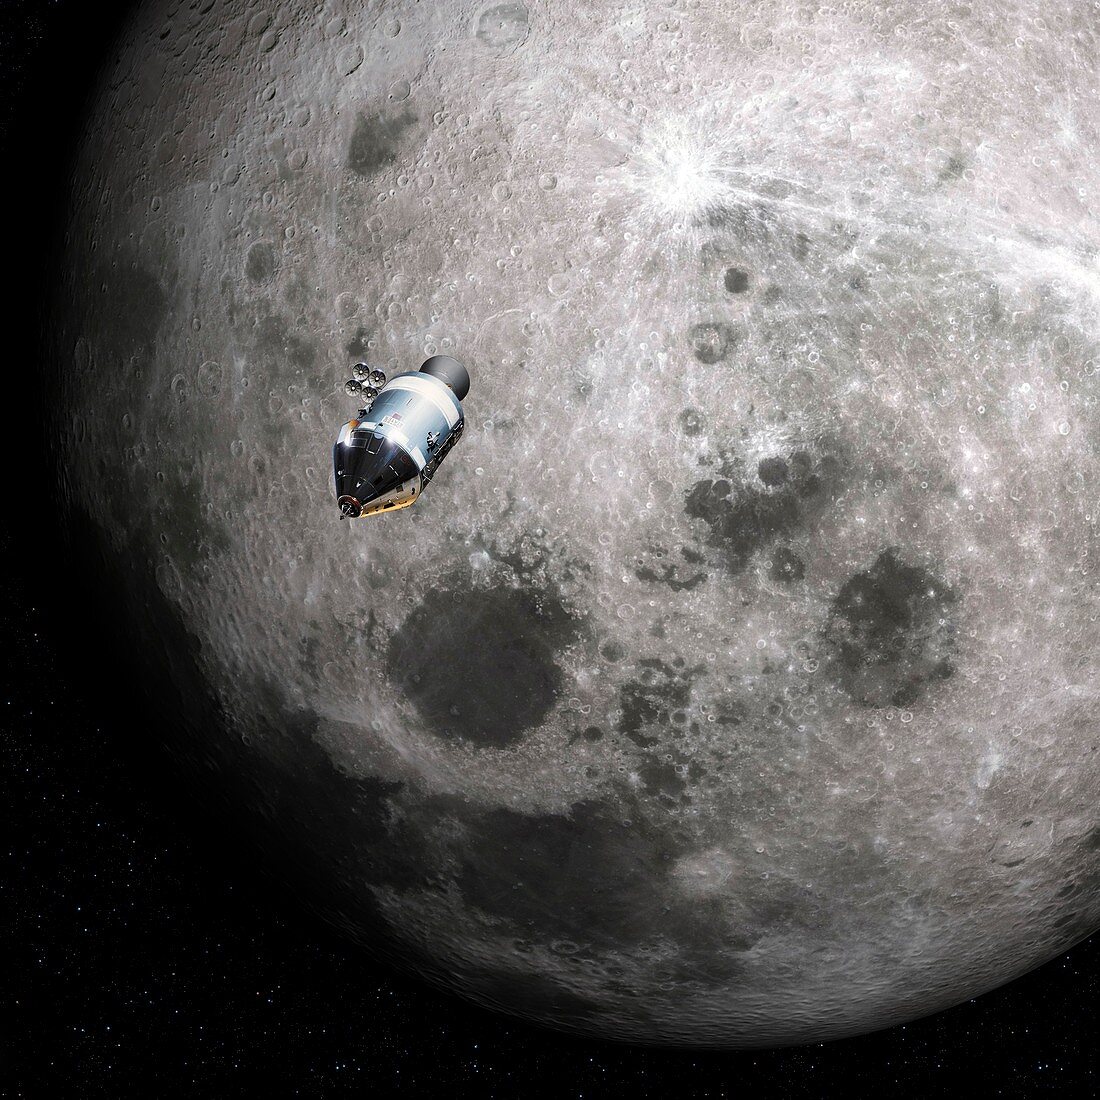 Apollo 8 spacecraft and Moon, illustration